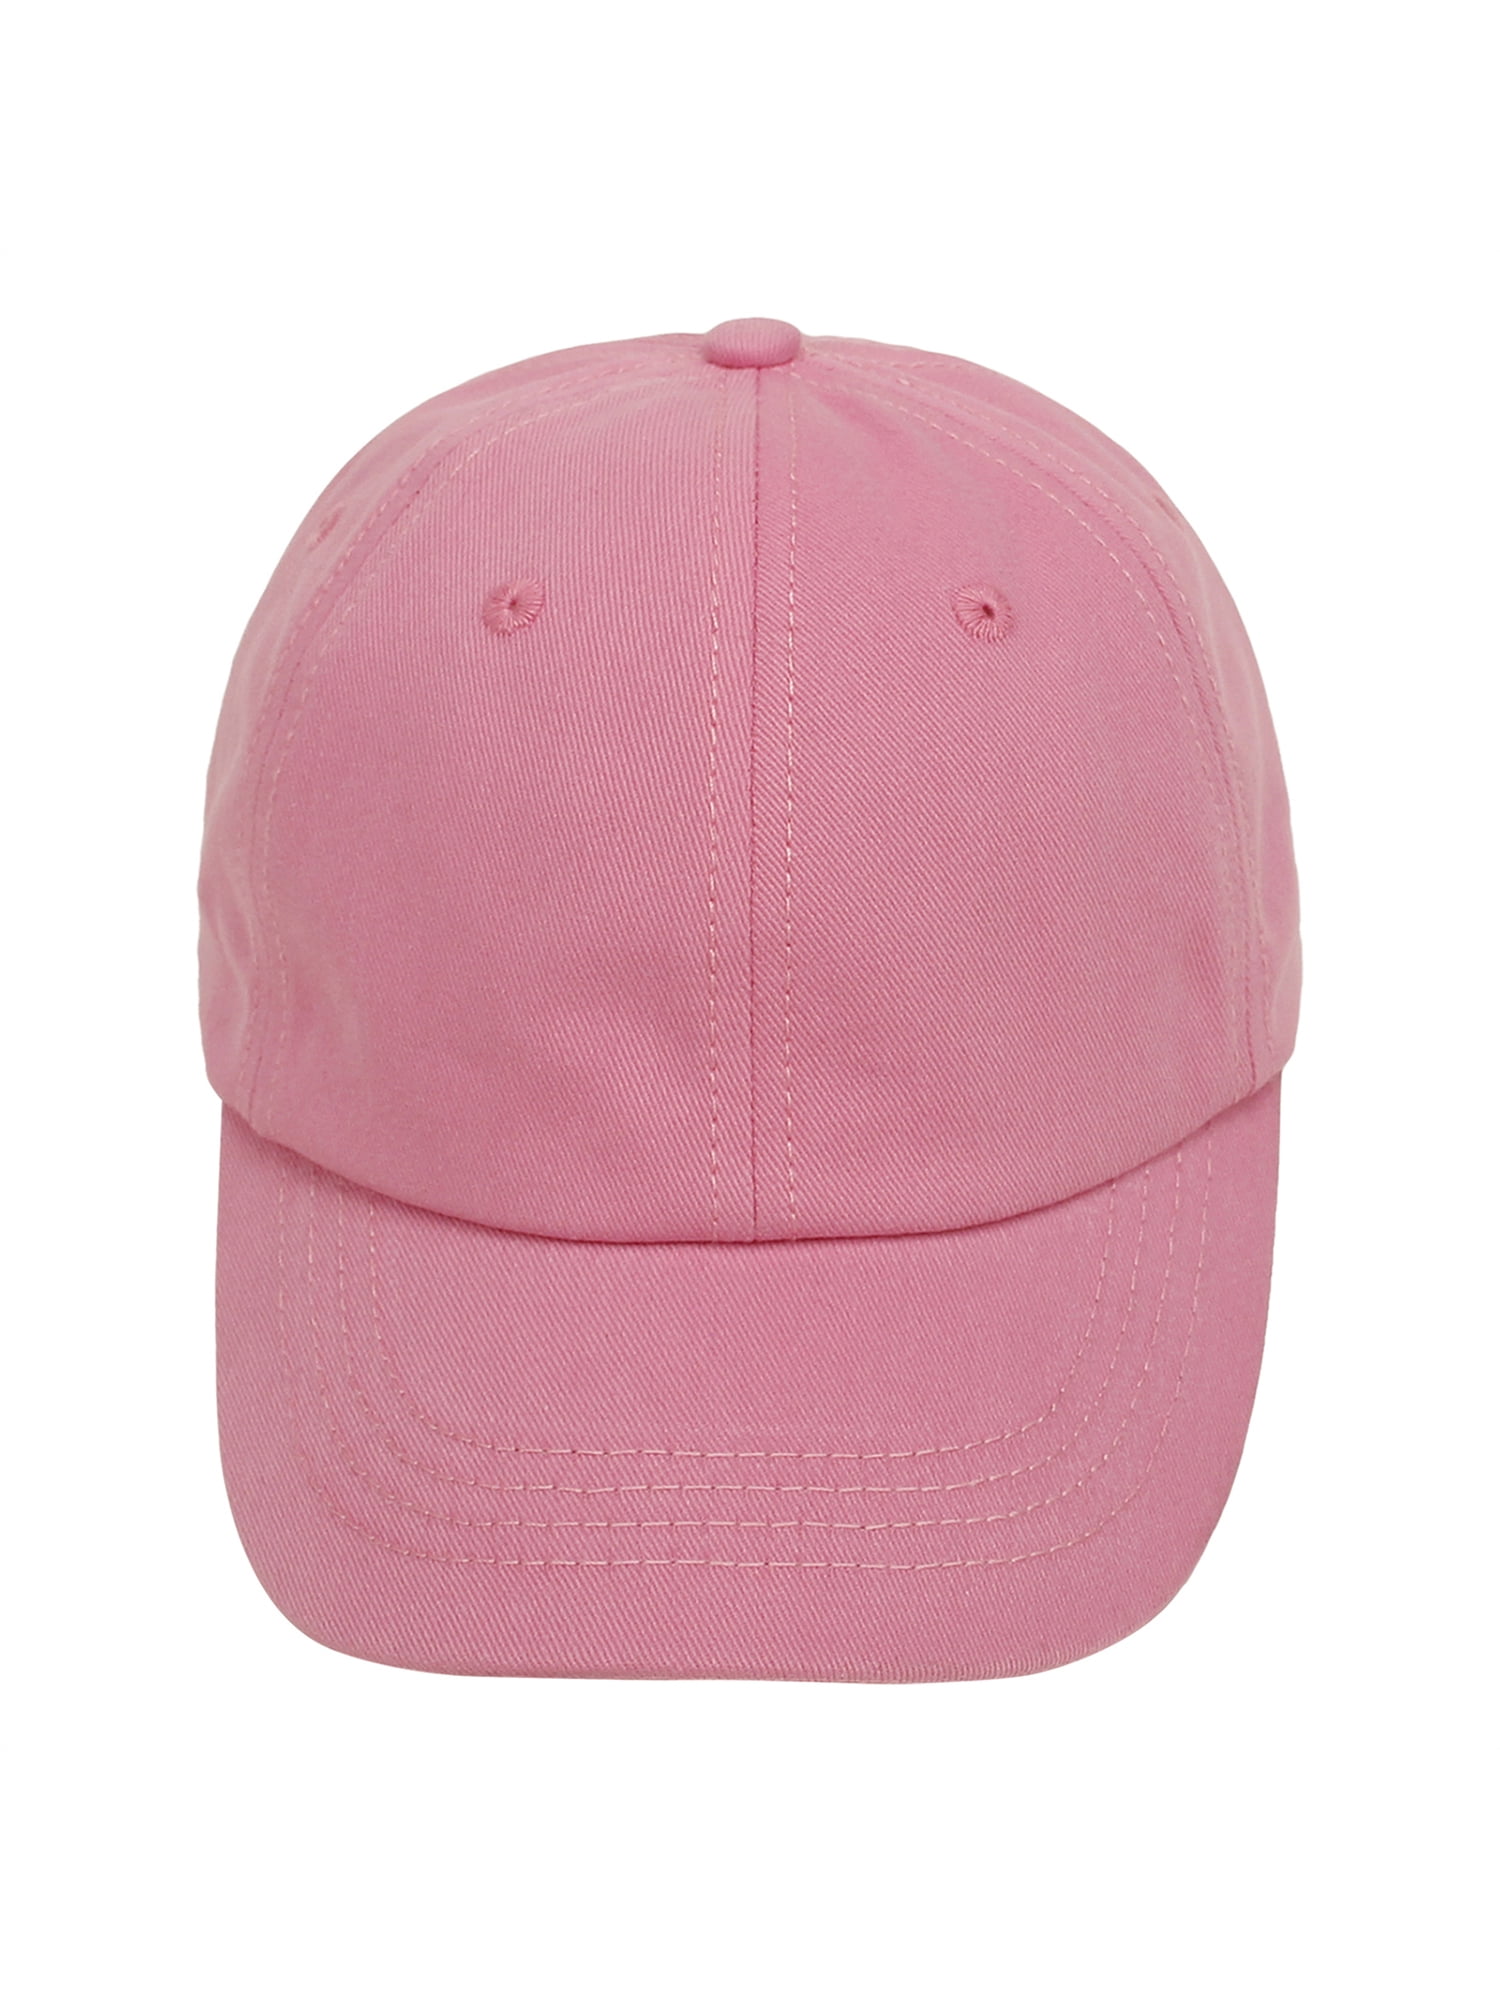 Toddler Boys Girls Summer Baseball Caps Hip Hop Snapback Outdoor Adjustable Hats 